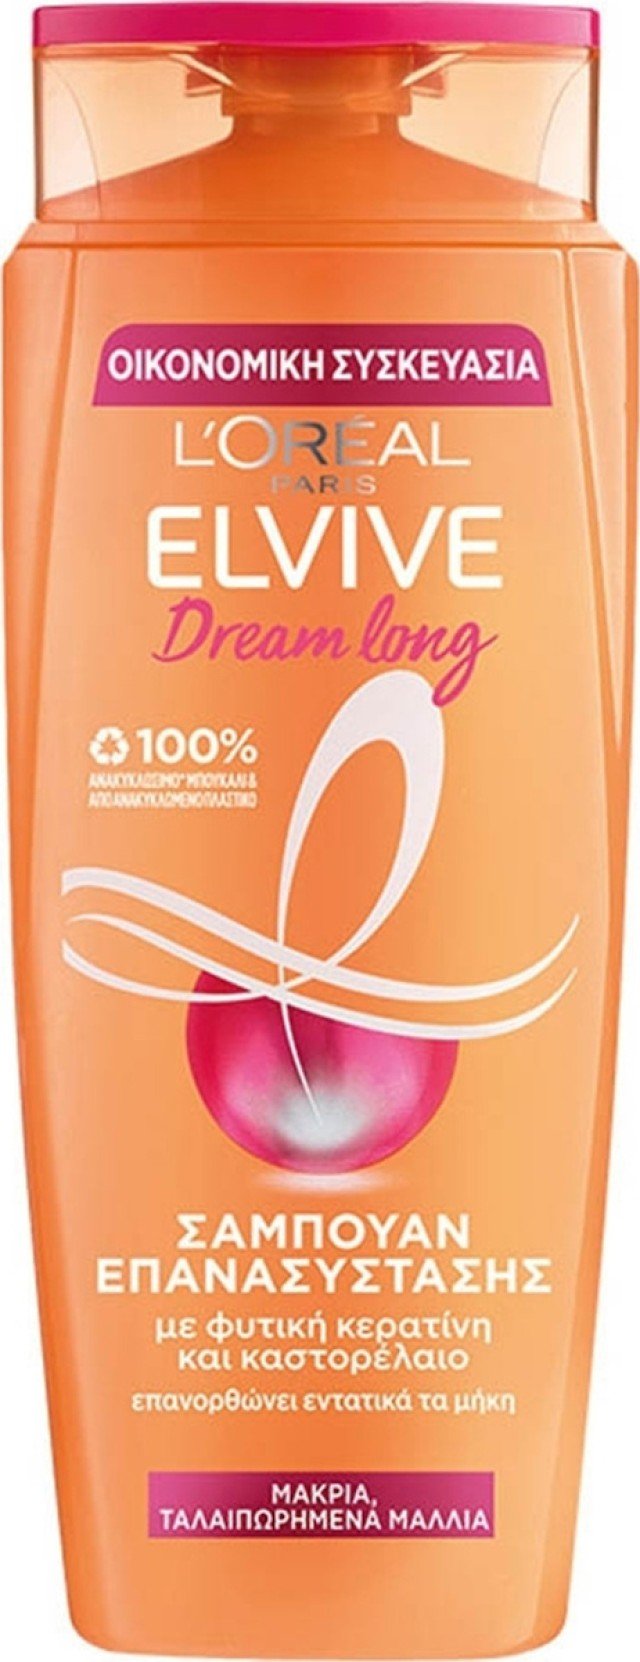 L'Oreal Paris Elvive Dream Long Shampoo Σαμπουάν Επανασύστασης για Μακριά - Ταλαιπωρημένα Μαλλιά 700ml